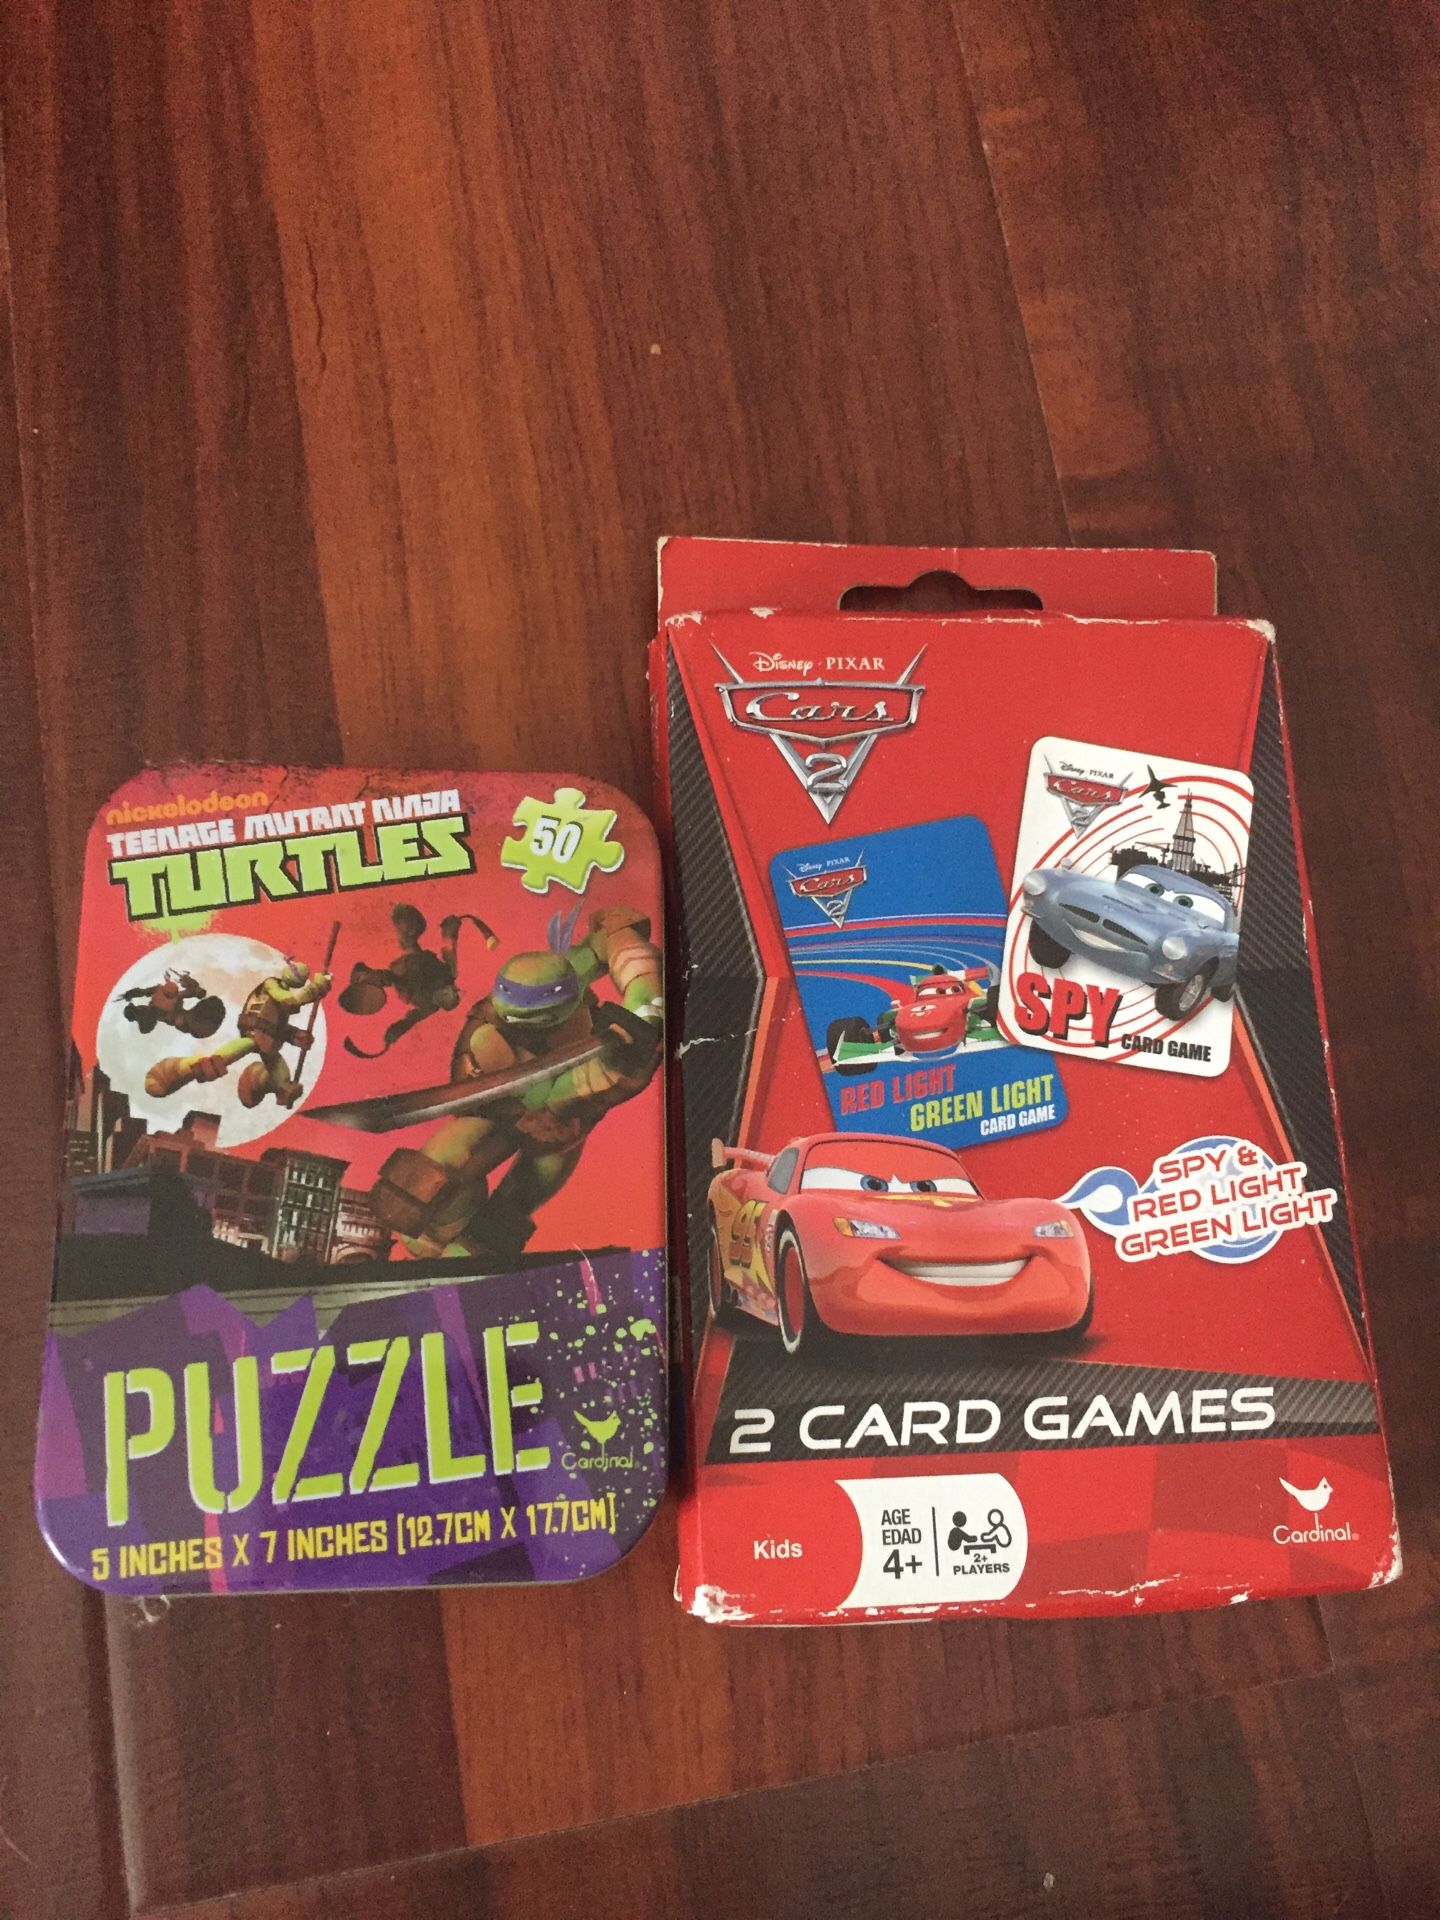 Ninja puzzle and Disney cars game